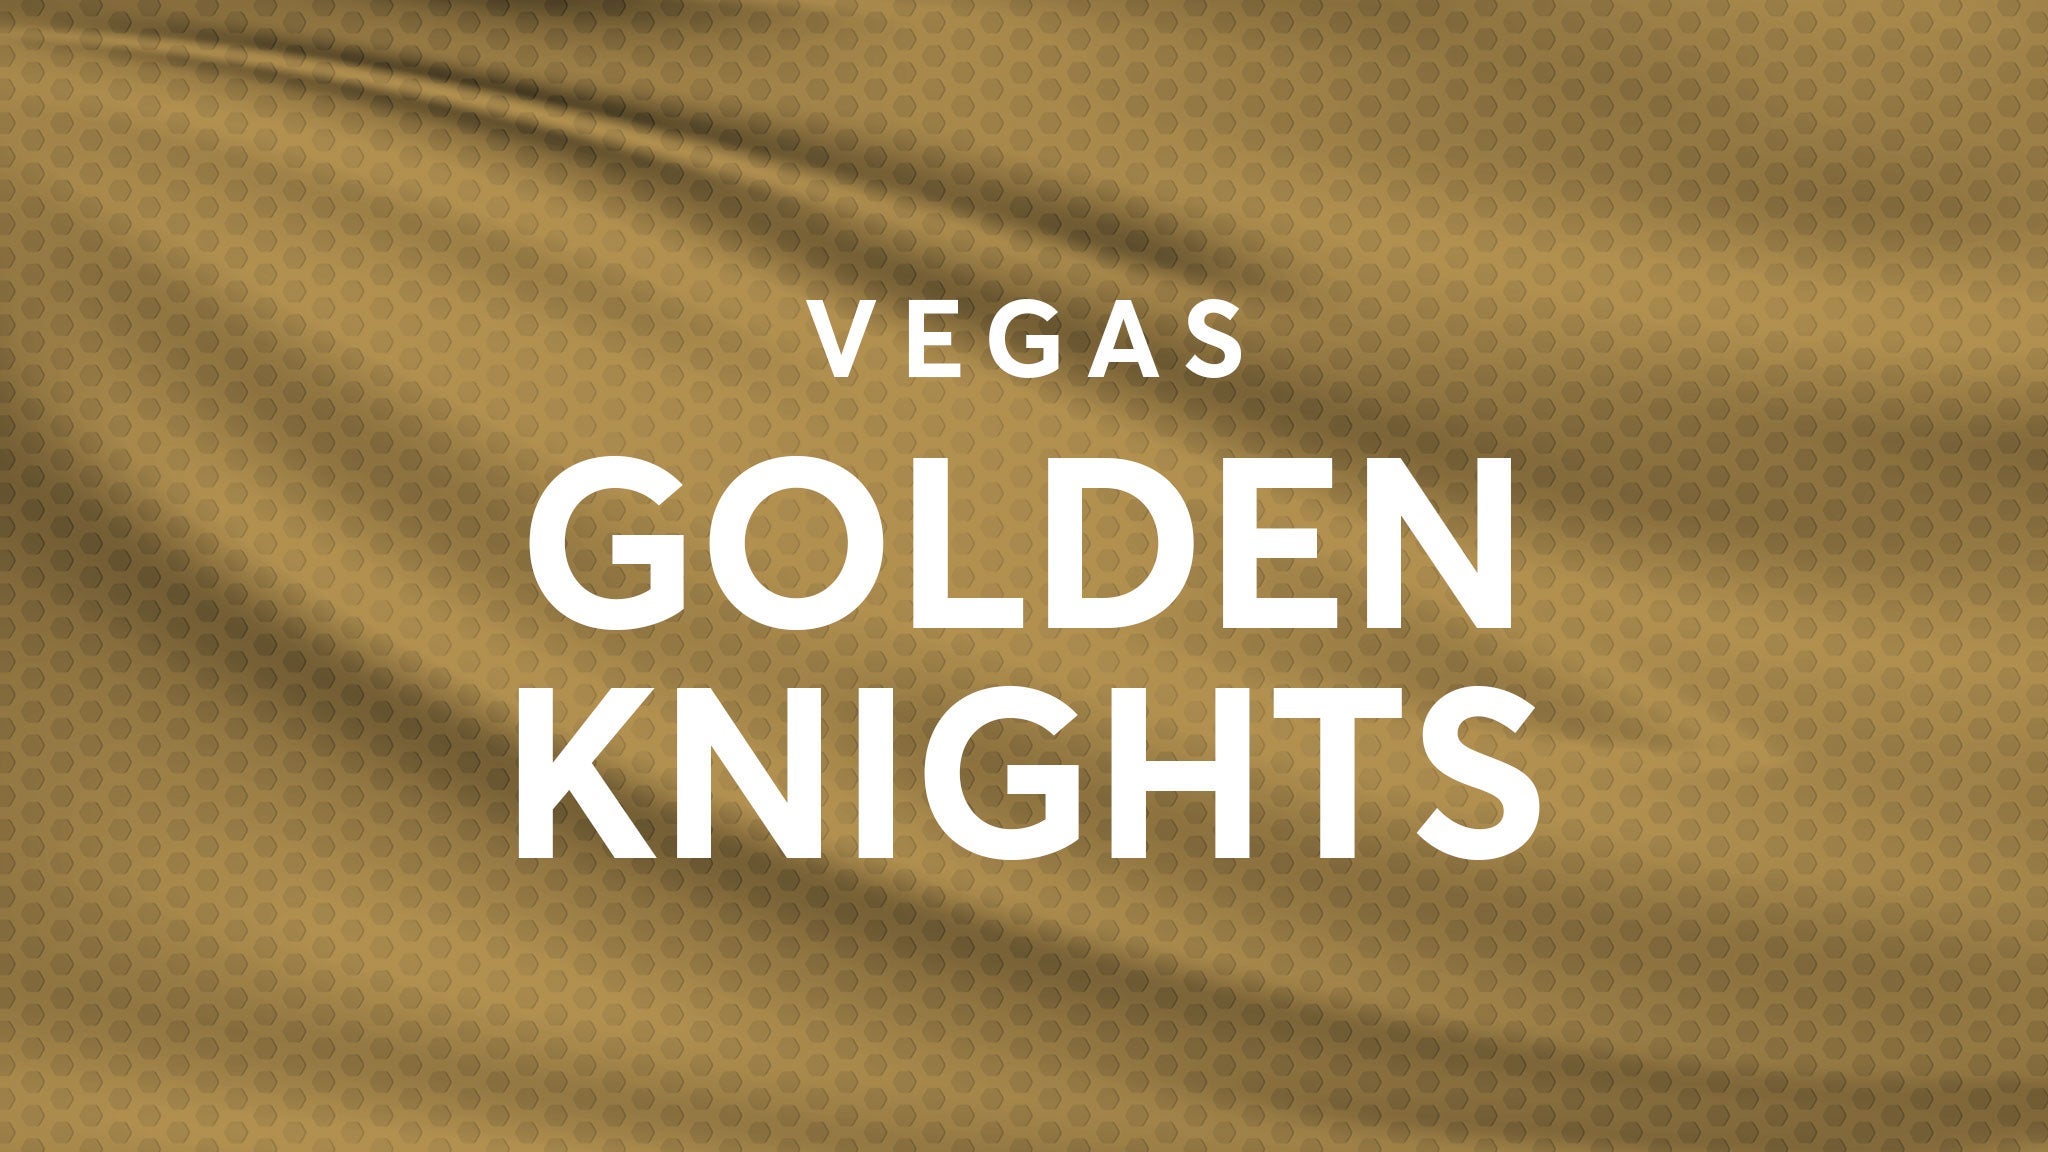 Vegas Golden Knights vs. Vancouver Canucks